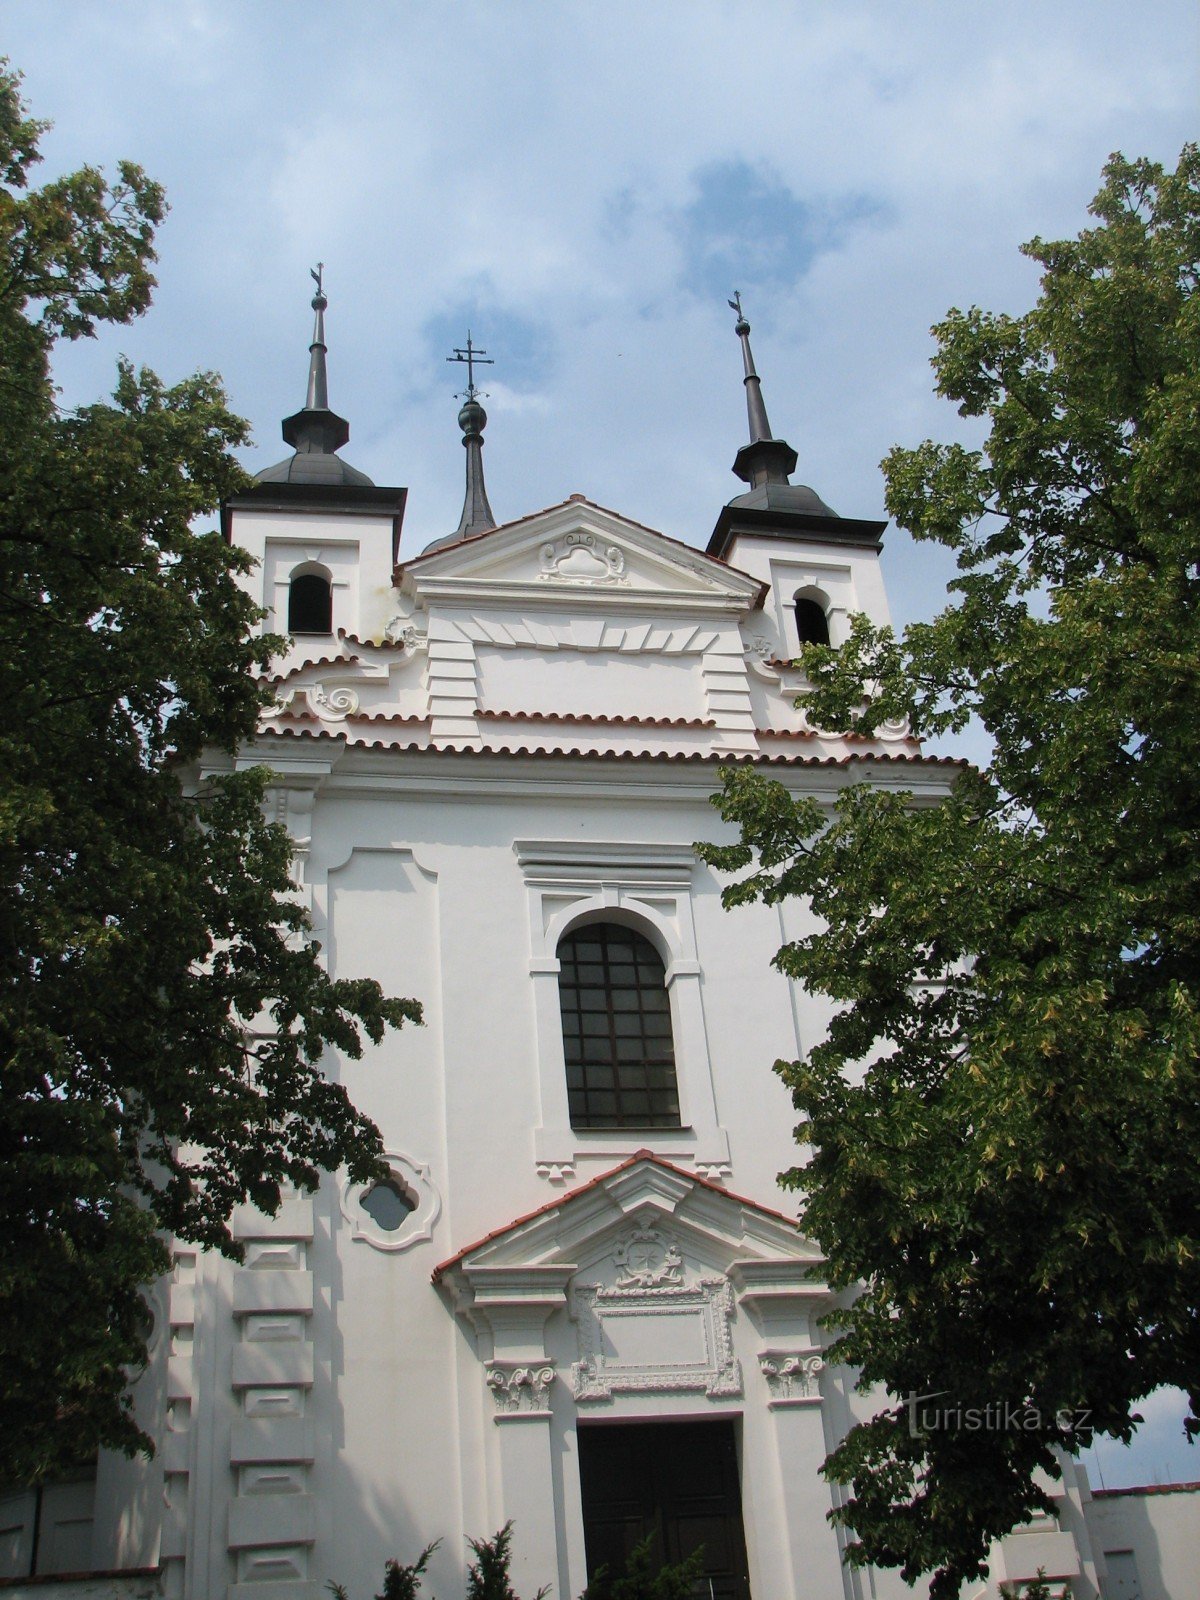 church of st. Michal in Bechyn